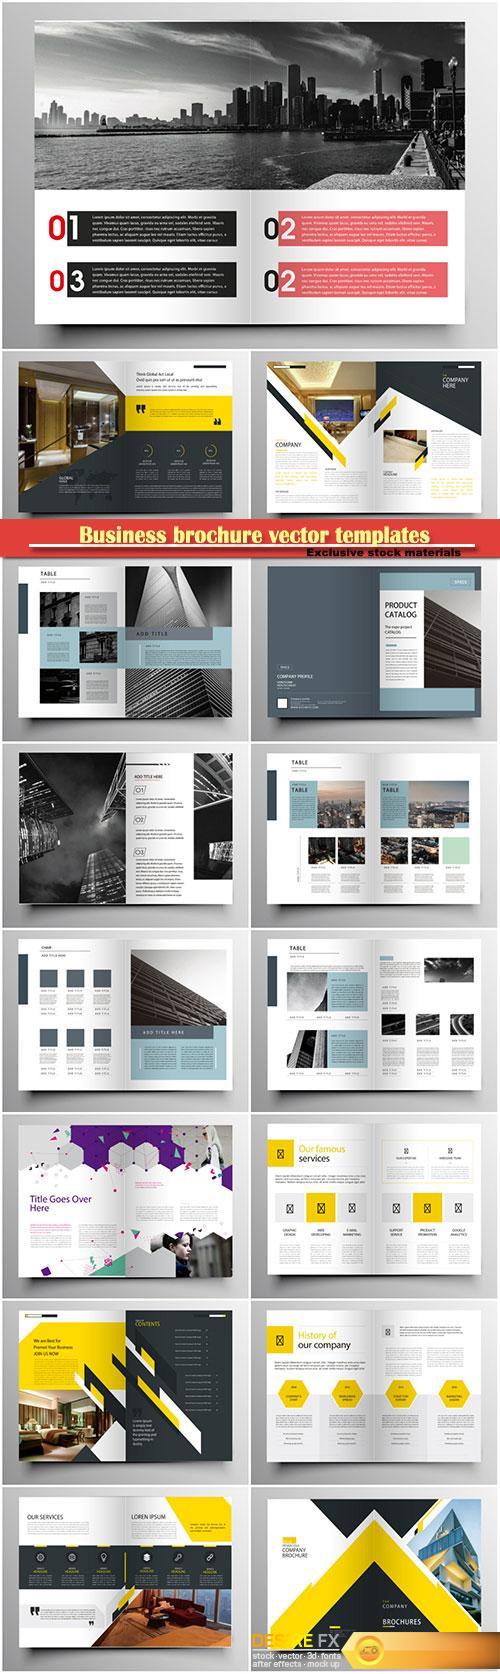 Business brochure vector templates, magazine cover, business mockup, education, presentation, report # 66